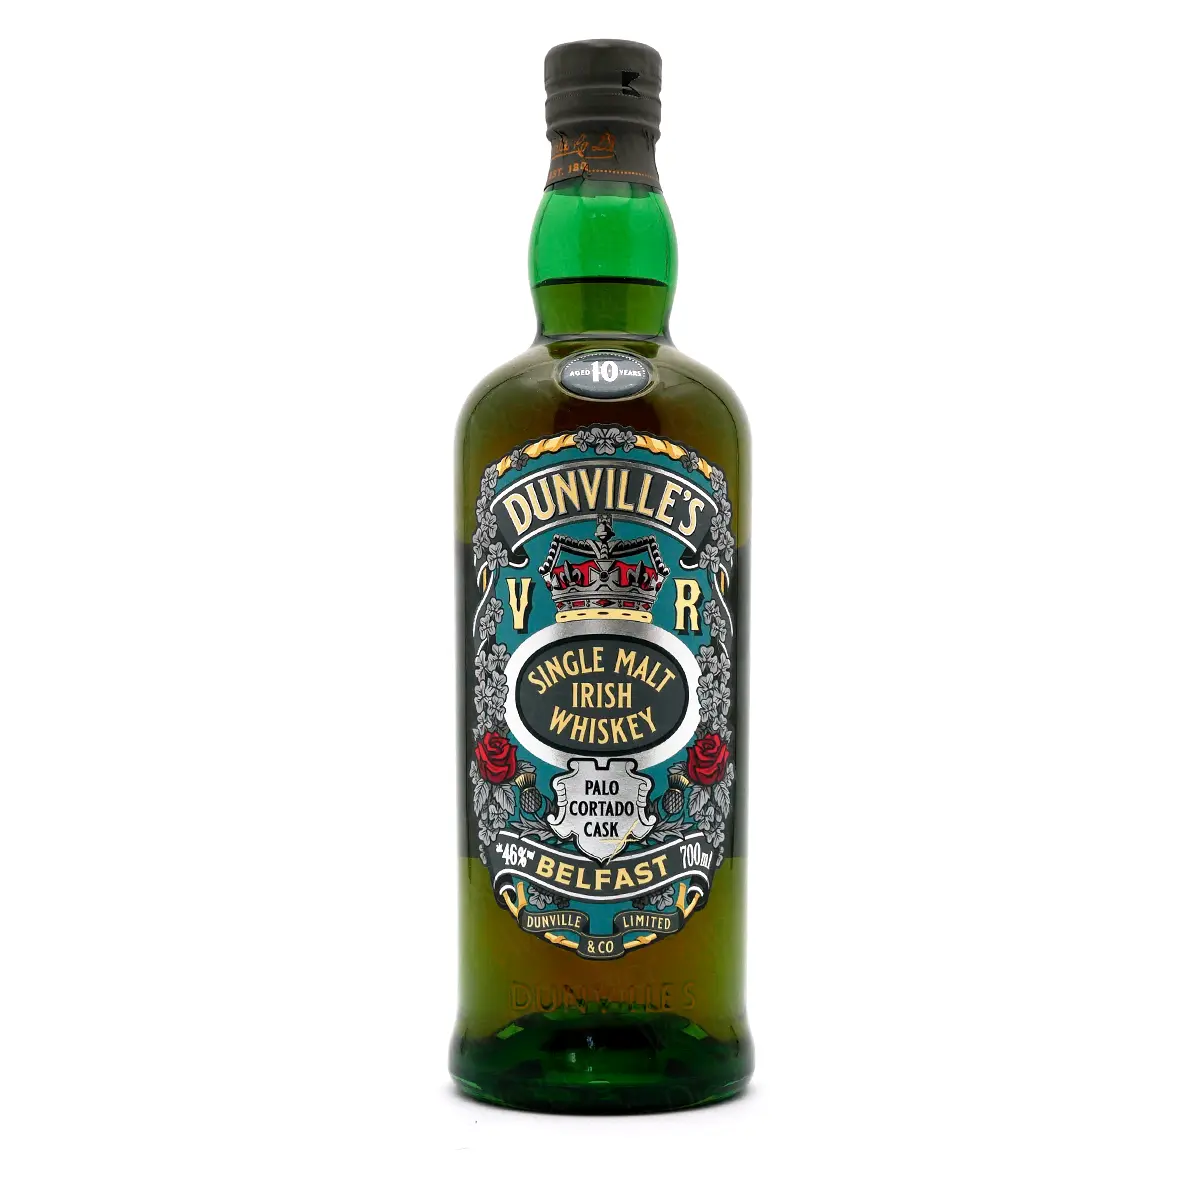 Dunville's | 10 Jahre PALO CORTADO Cask Irish Whiskey